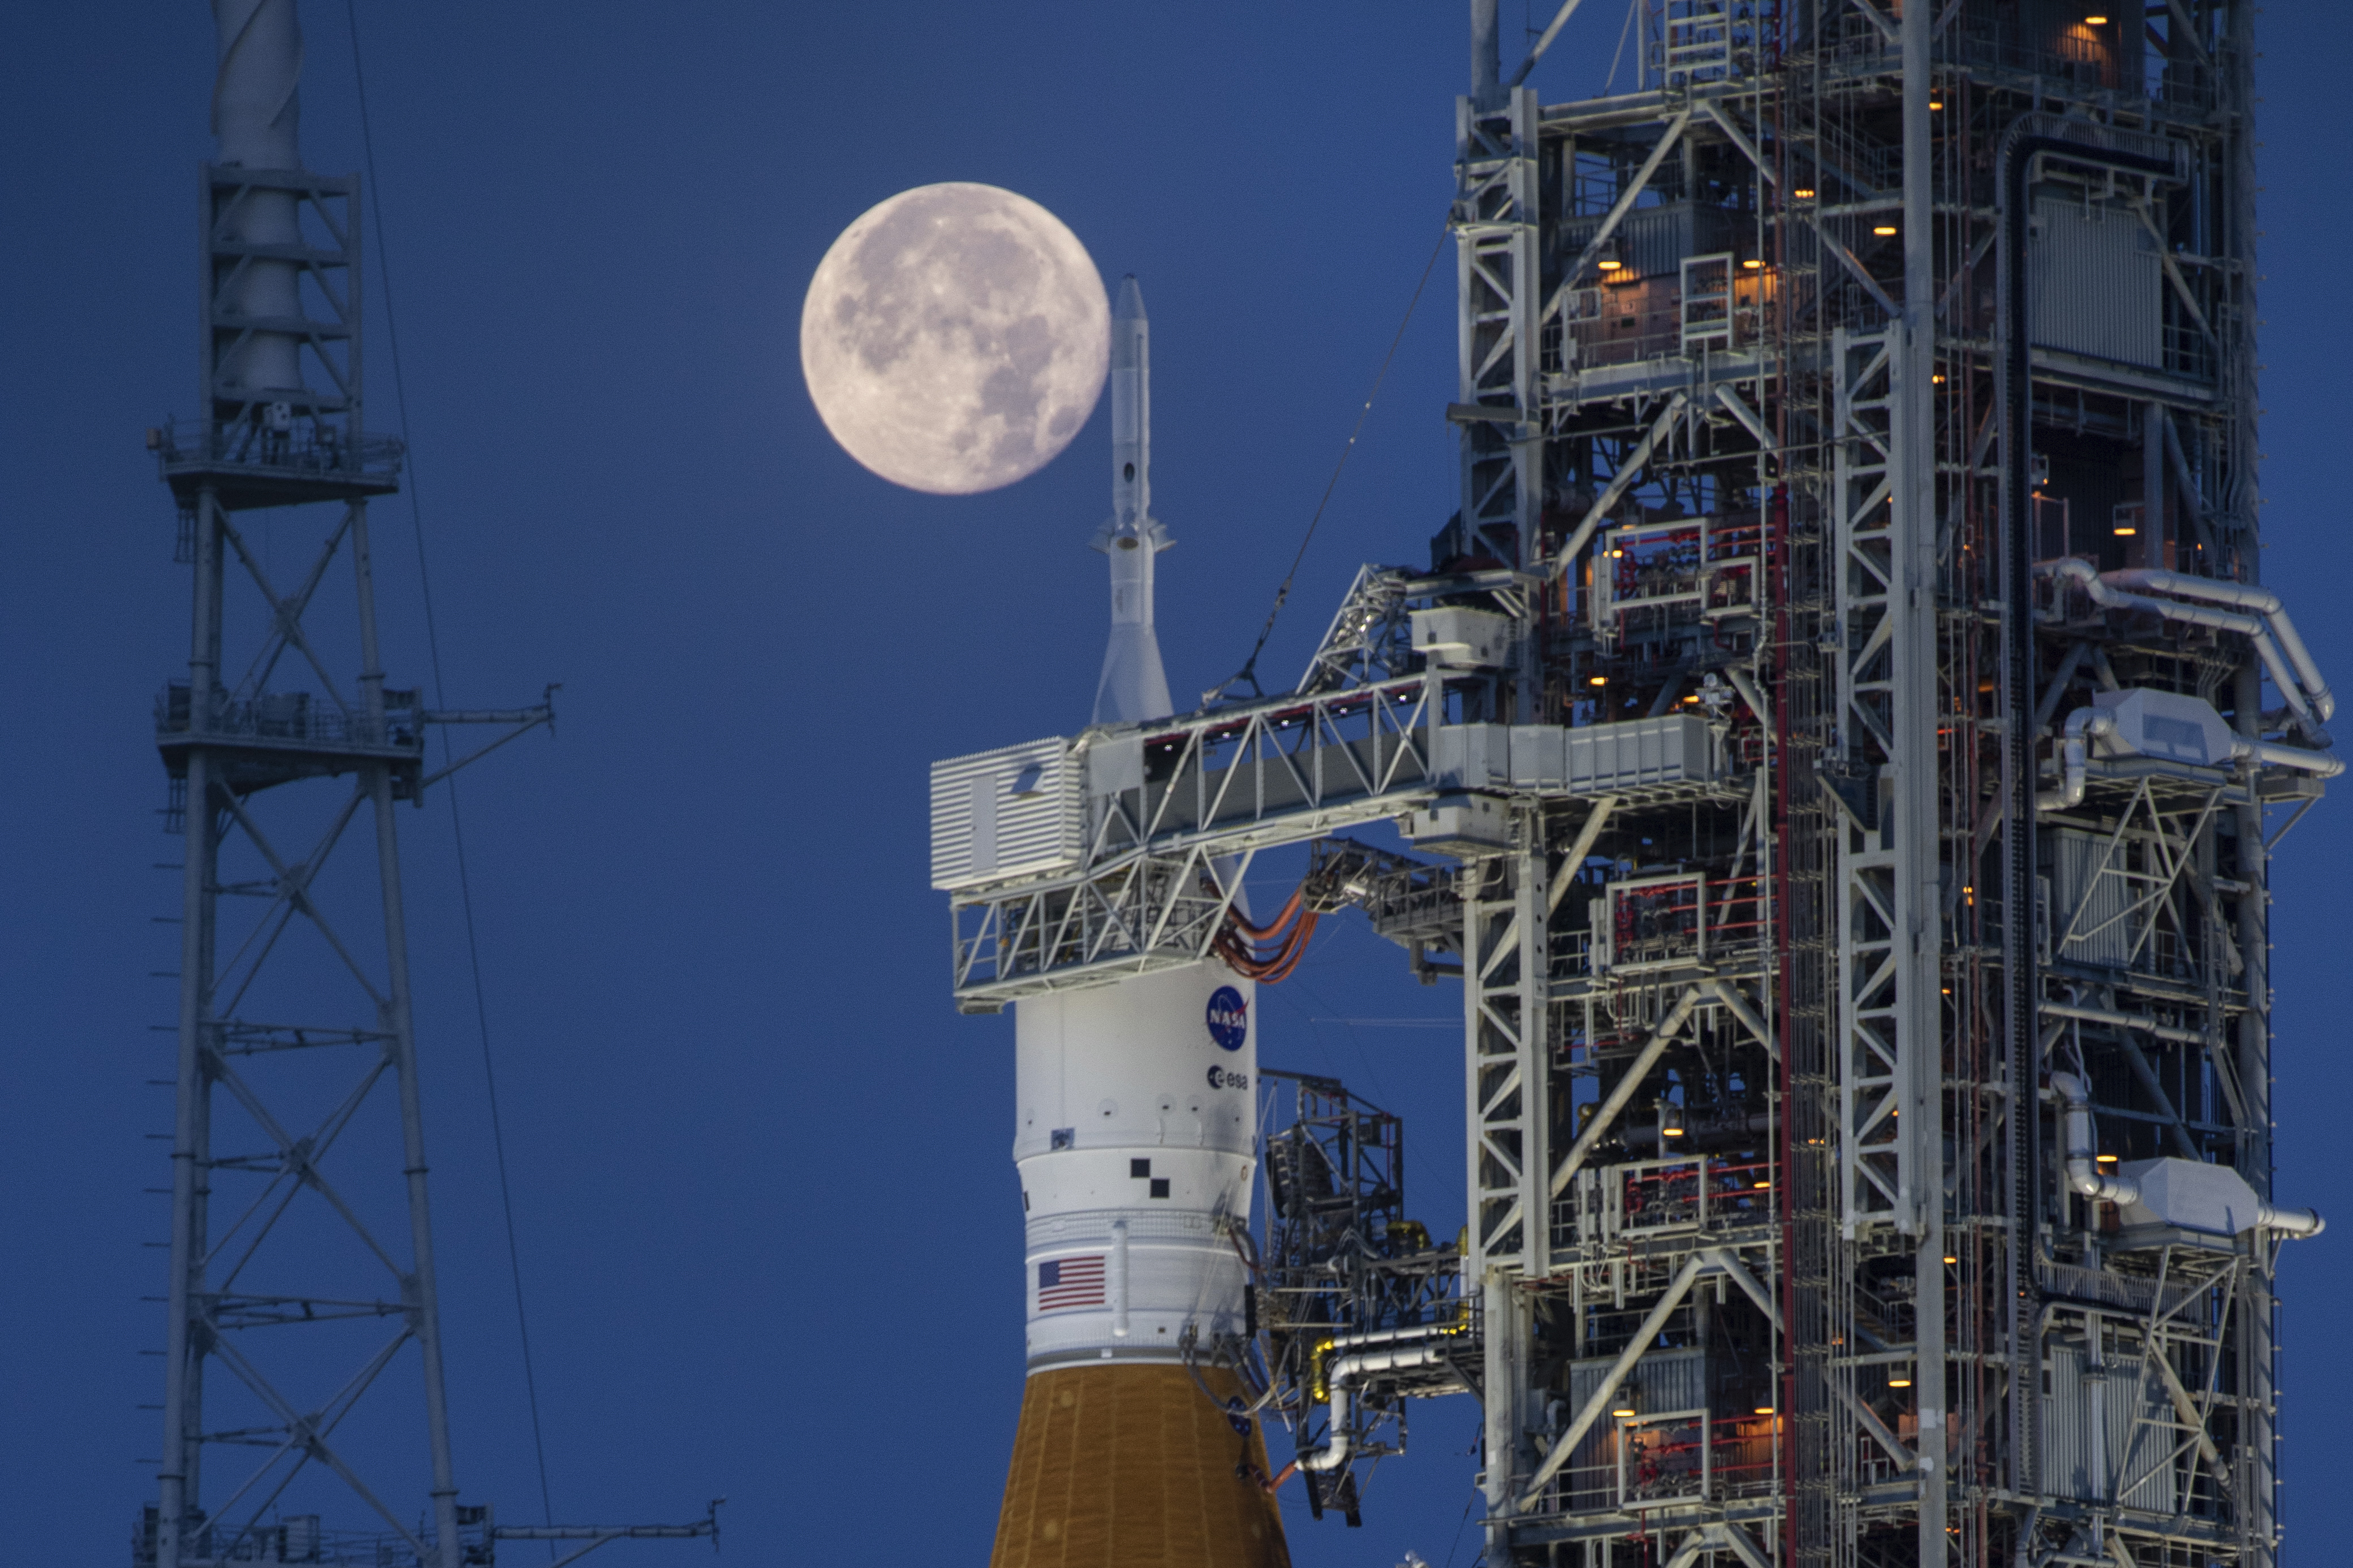 NASA Names Astronauts to Next Moon Mission, First Crew Under Artemis - NASA